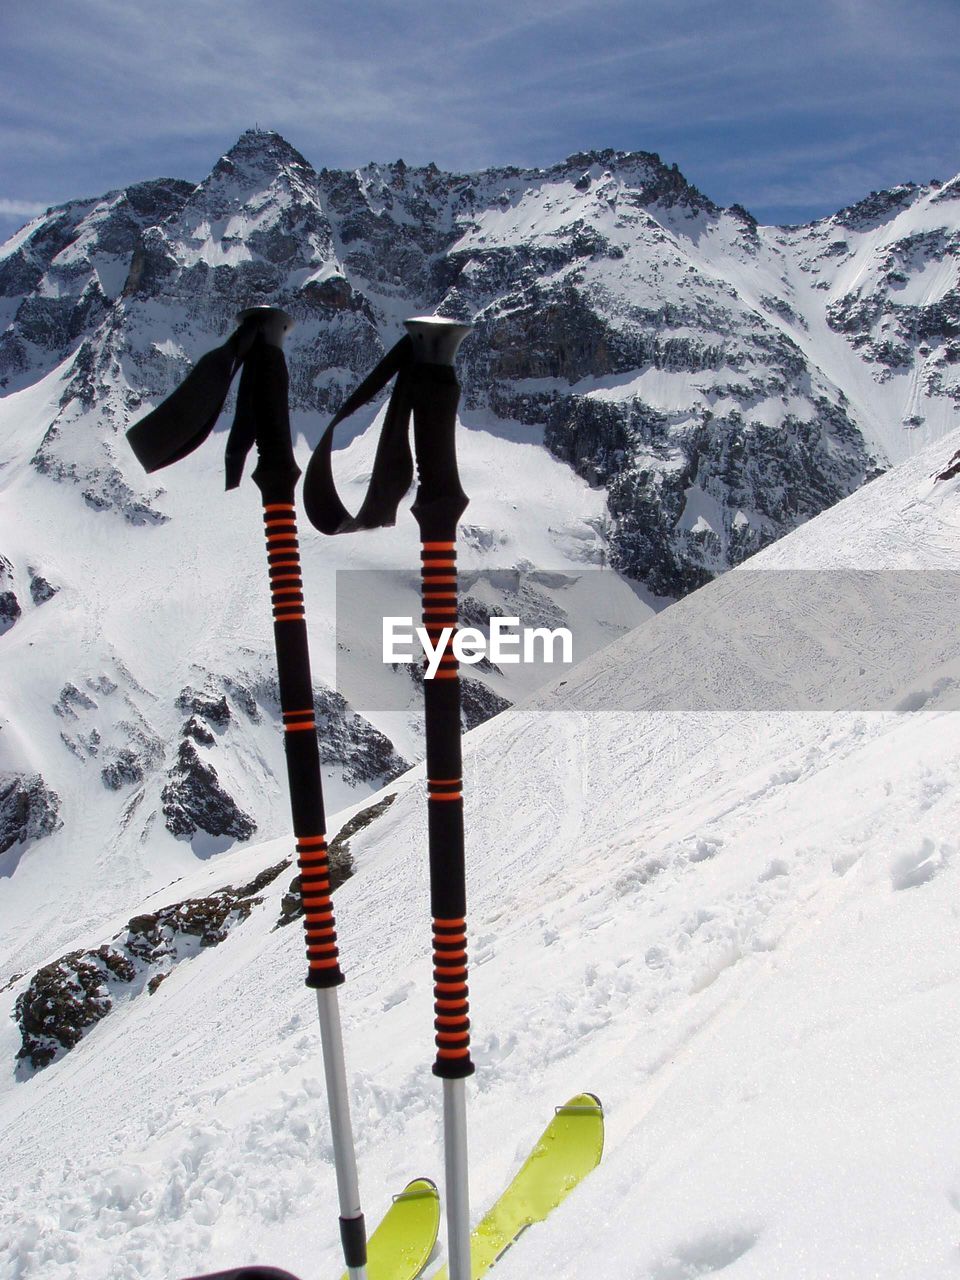 Winter ski tour on a snowy mountain in the alps